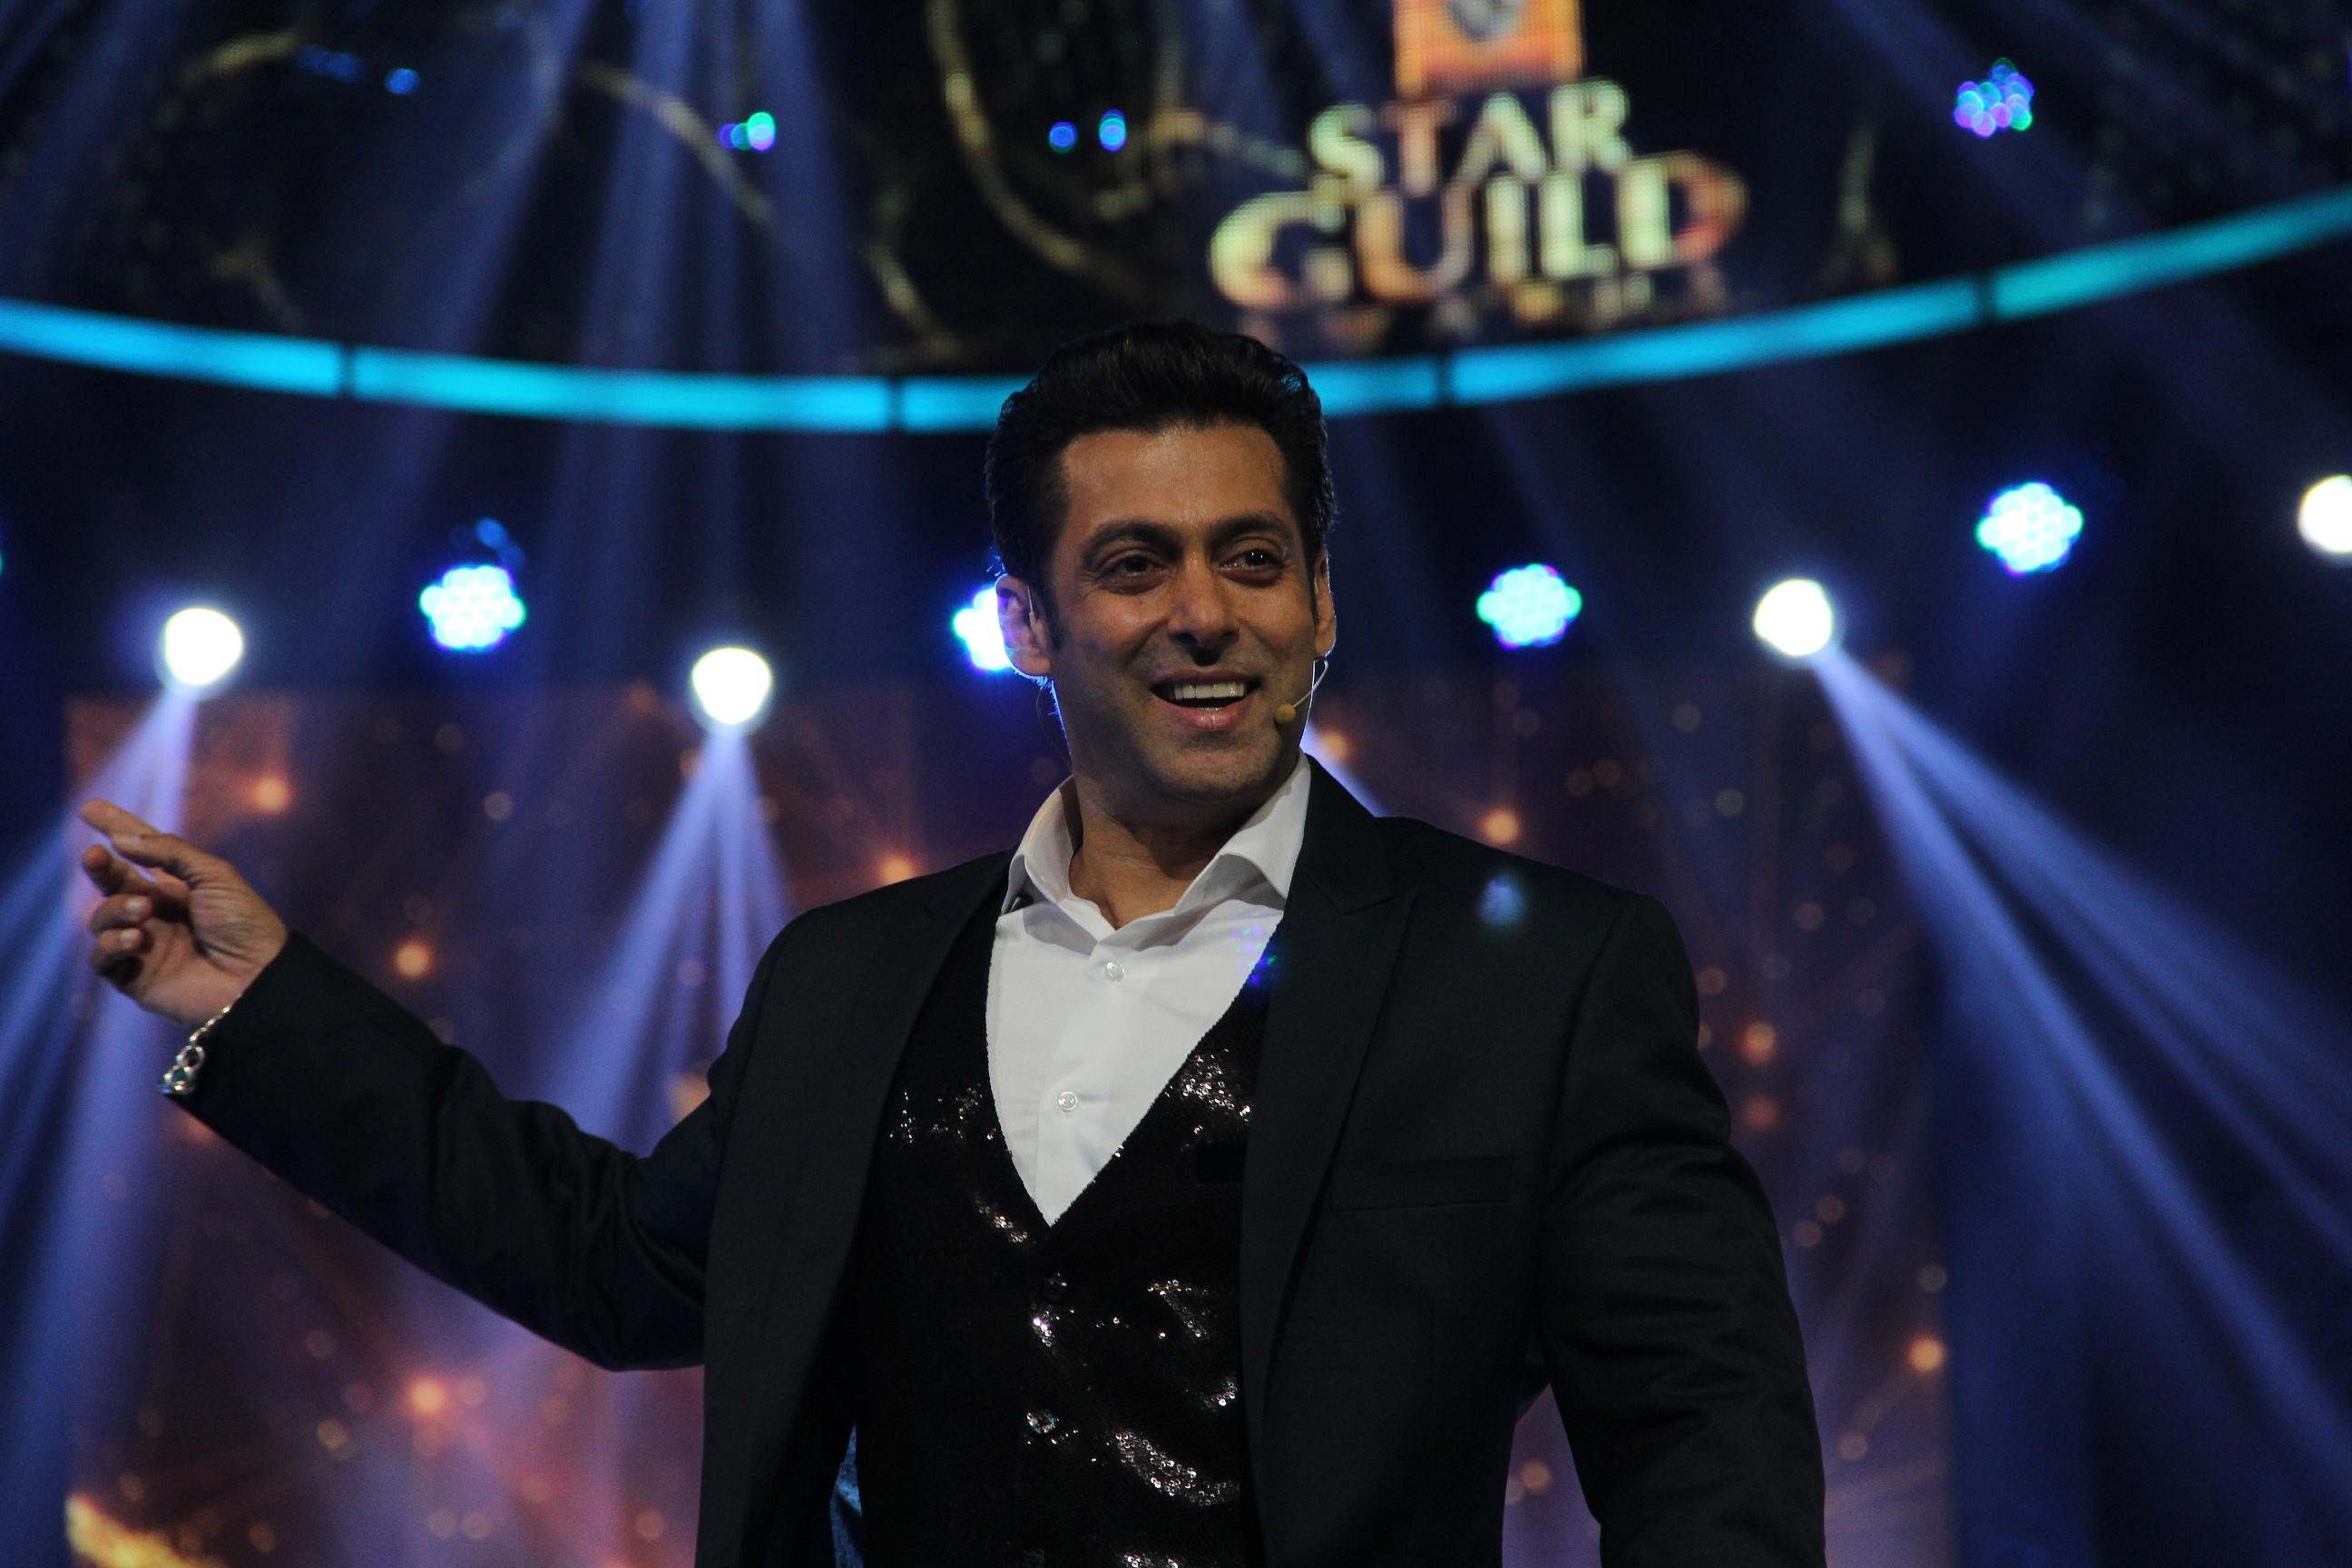 Salman Khan to attend TOIFA 2016 in Dubai - Bollywood Bubble